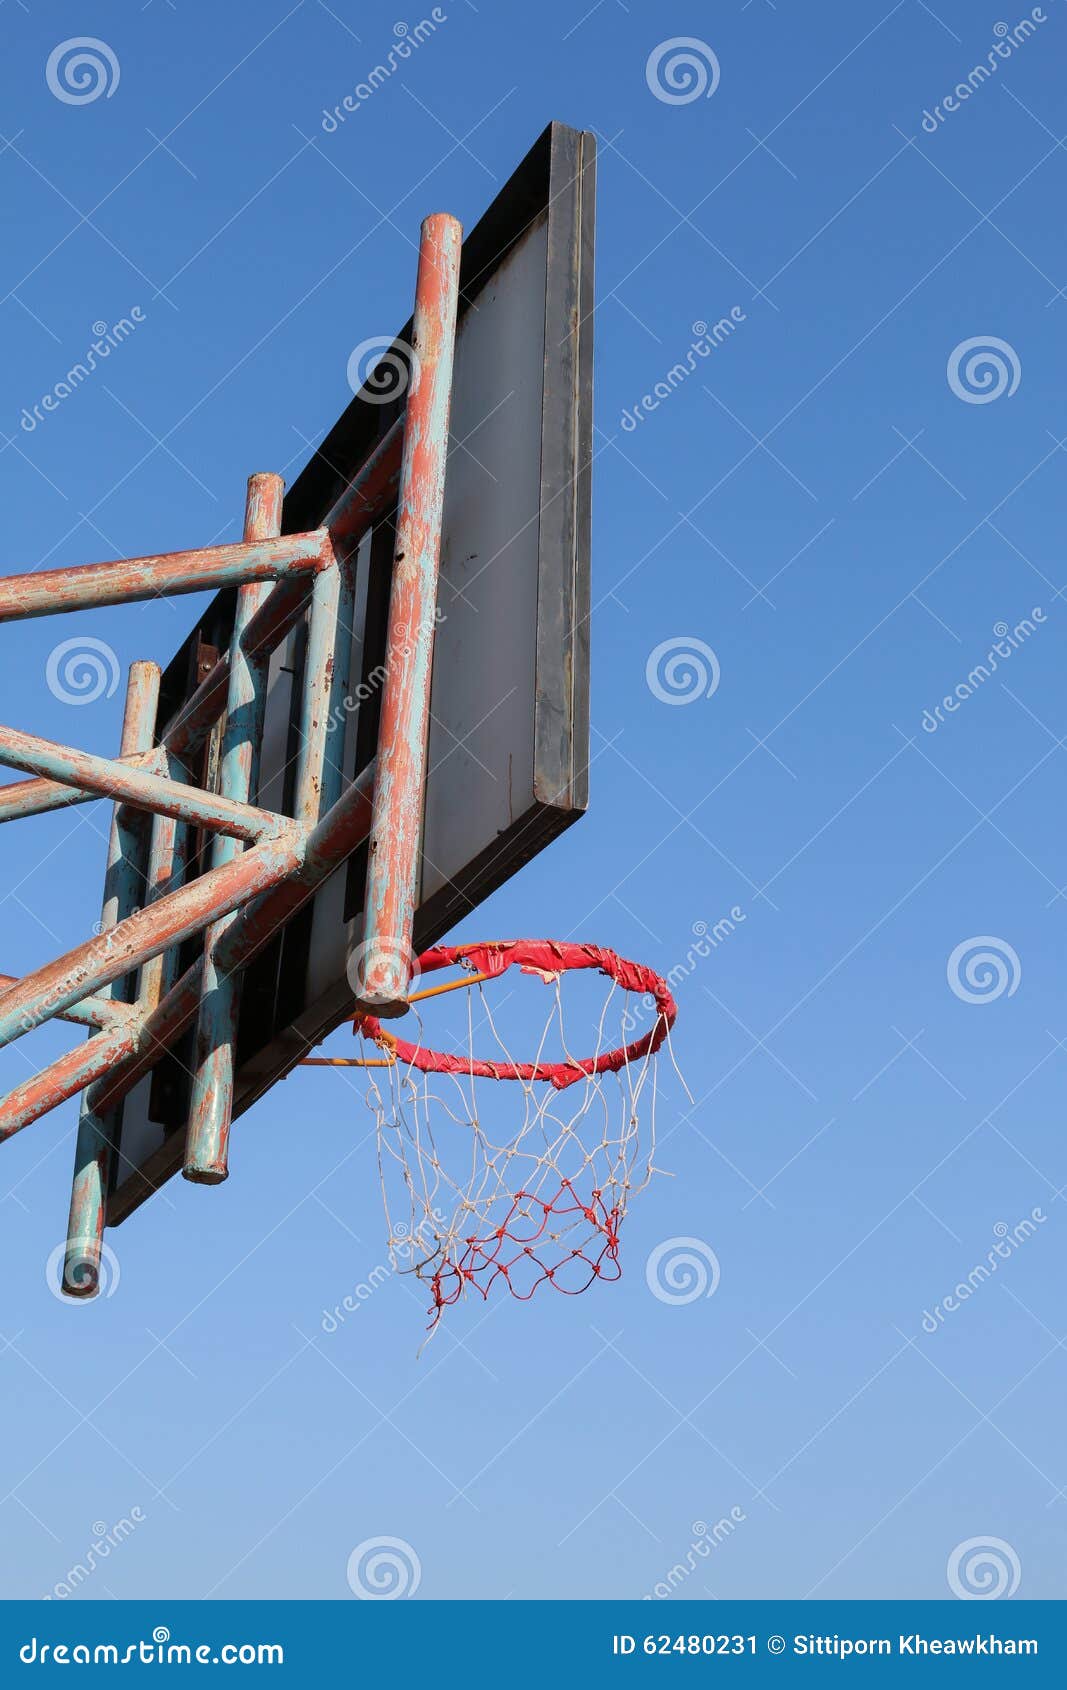 Old basketball hoop stock image. Image of board, health - 62480231